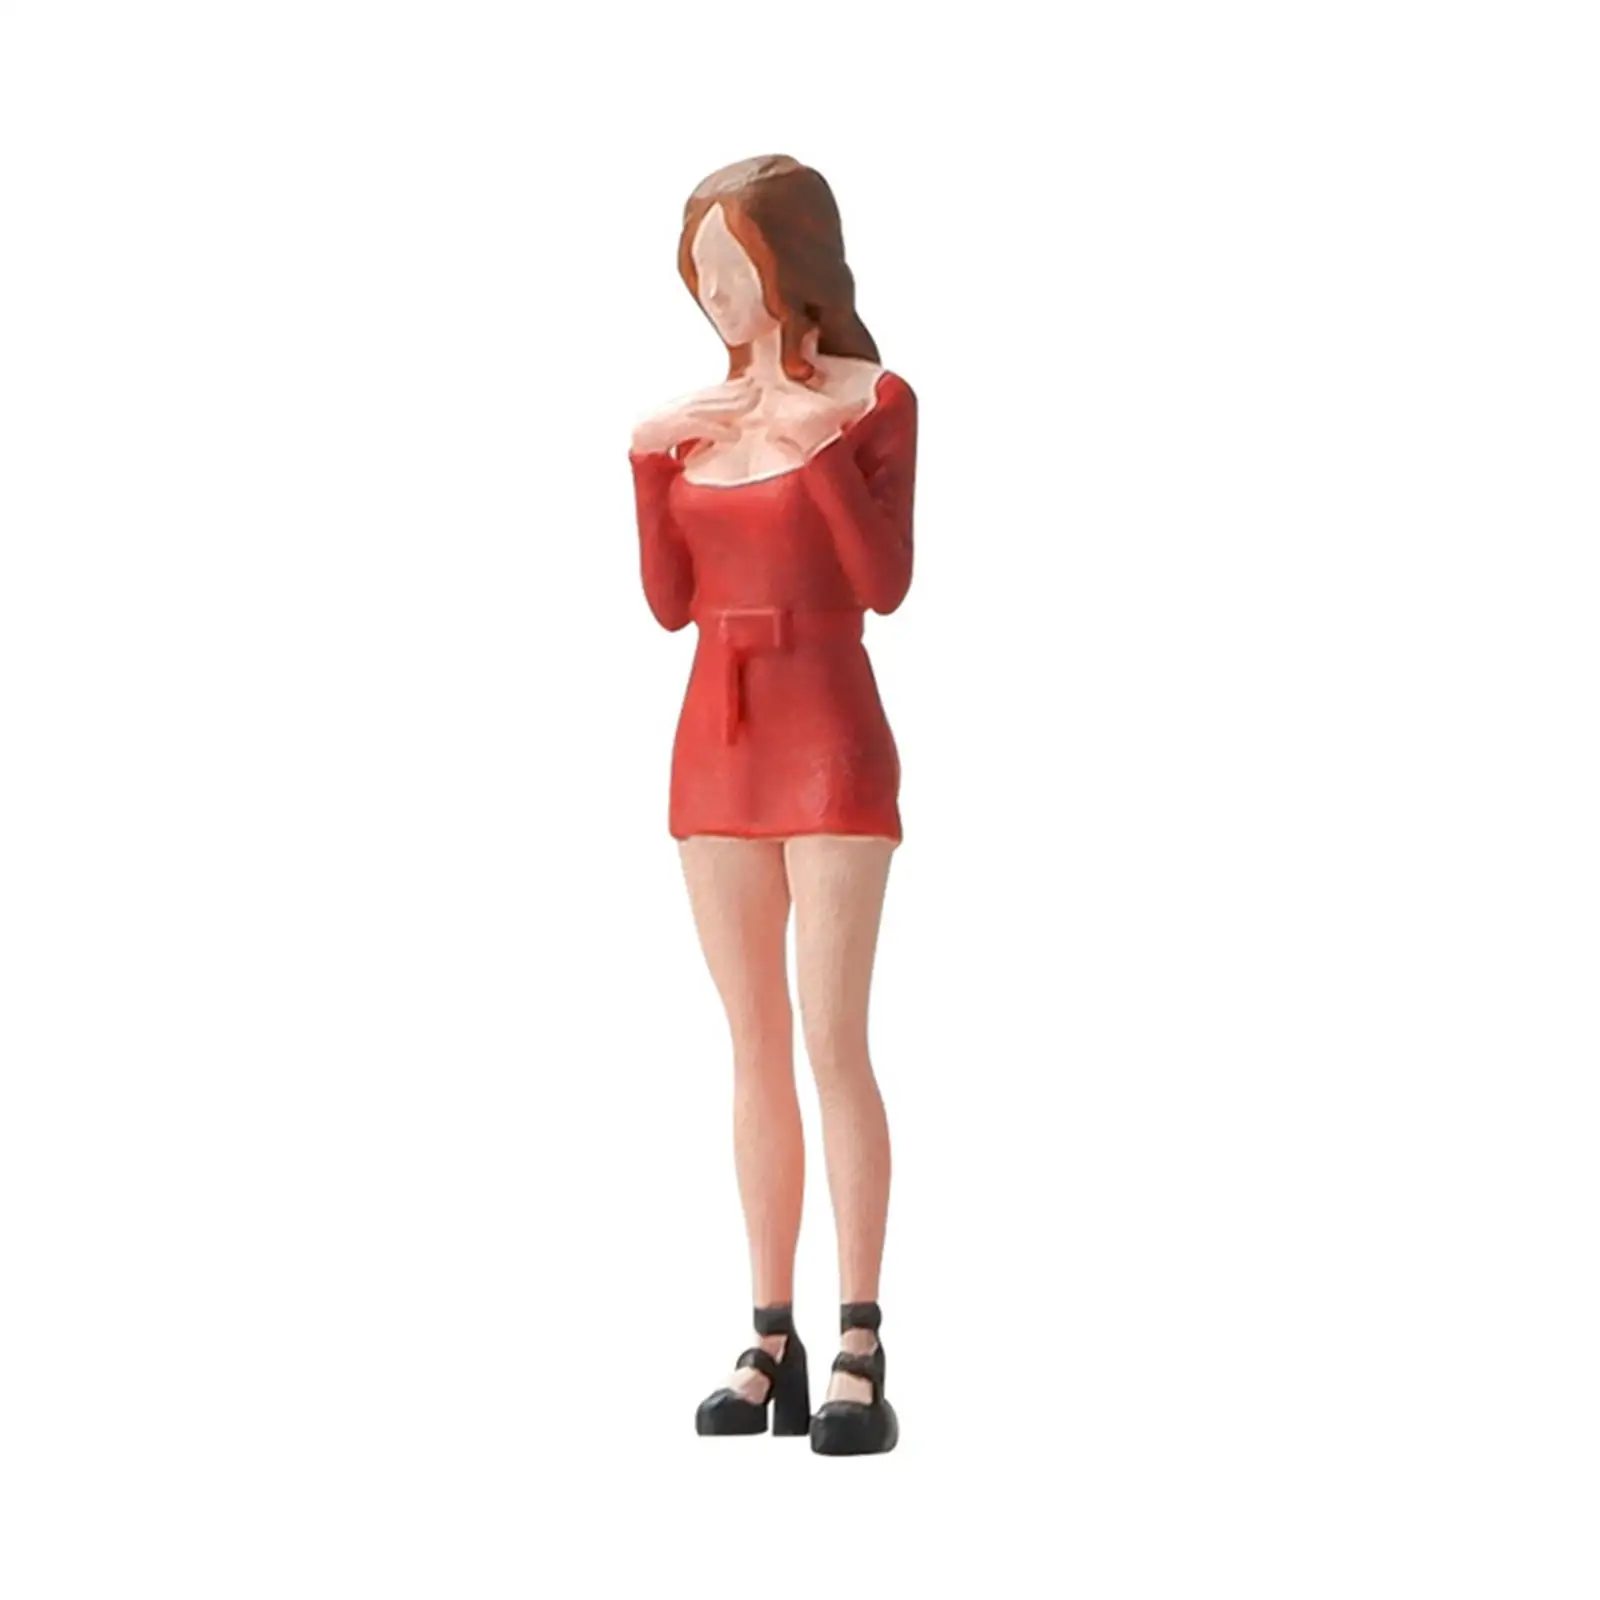 1/64 Hip Skirt Girl Figure Model Sand Table Layout Decoration Desktop Ornament S Scale Trains Architectural Resin Figurine Decor